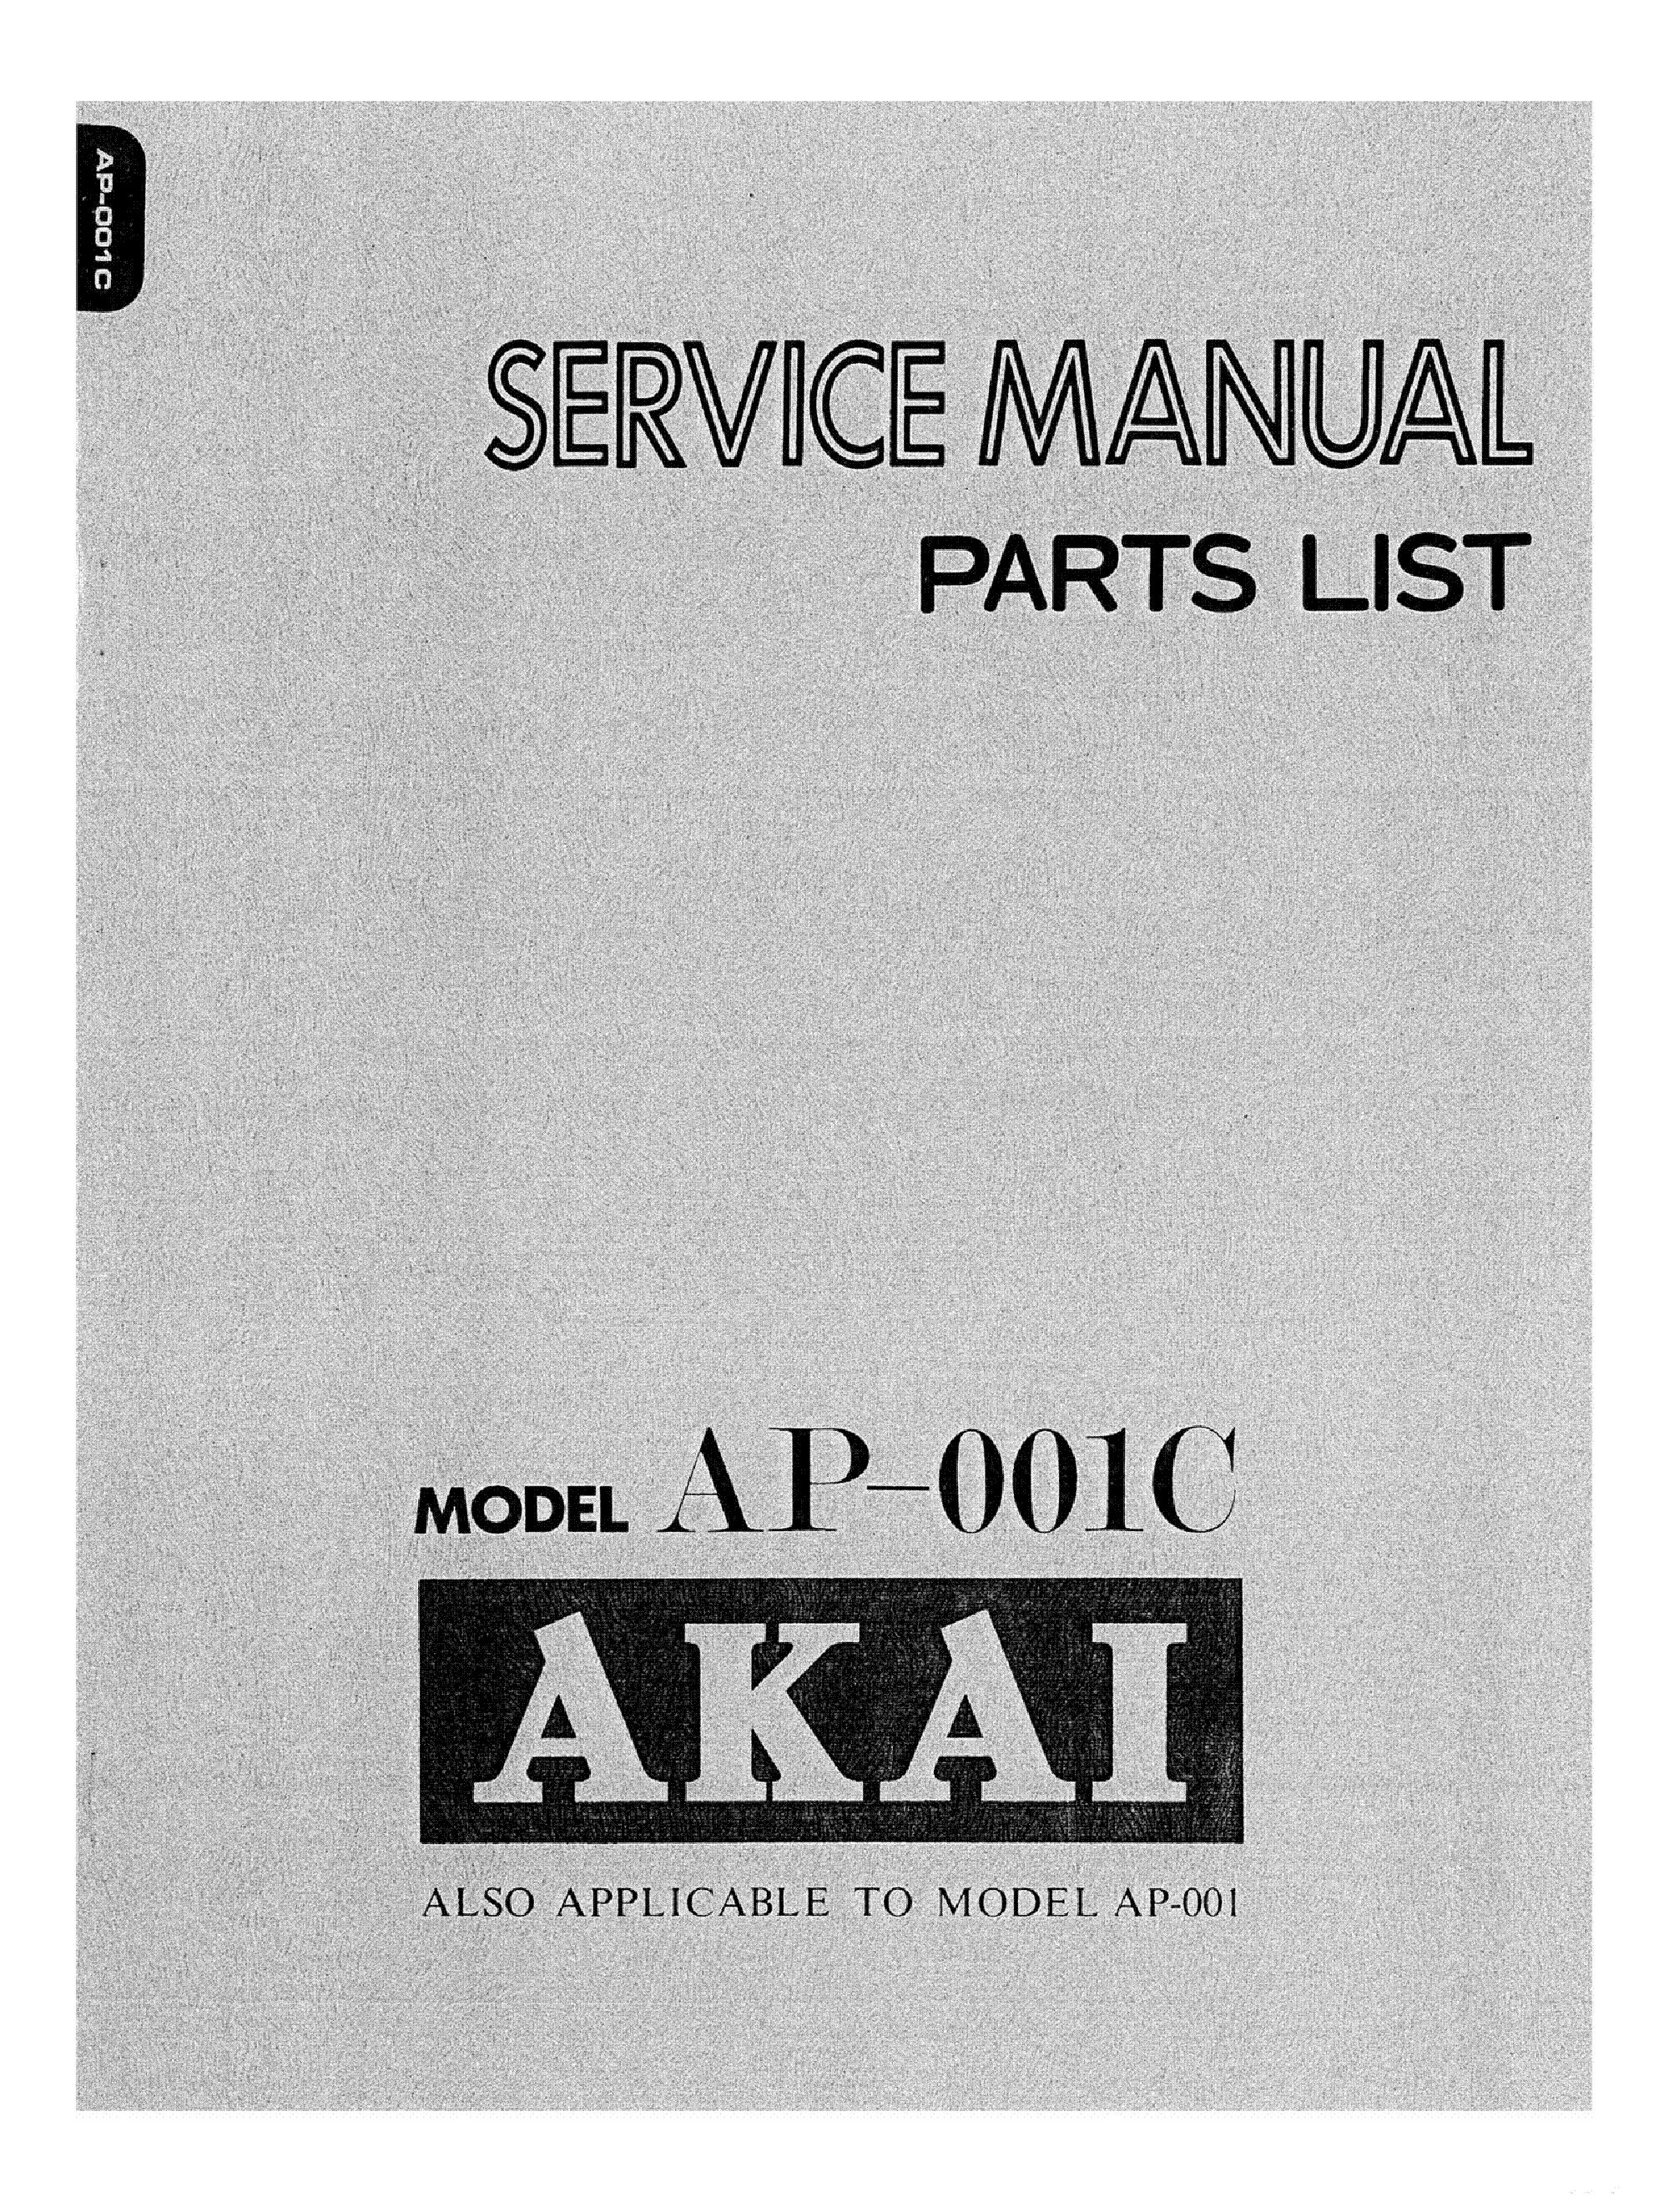 AKAI AP-001C SM service manual (2nd page)